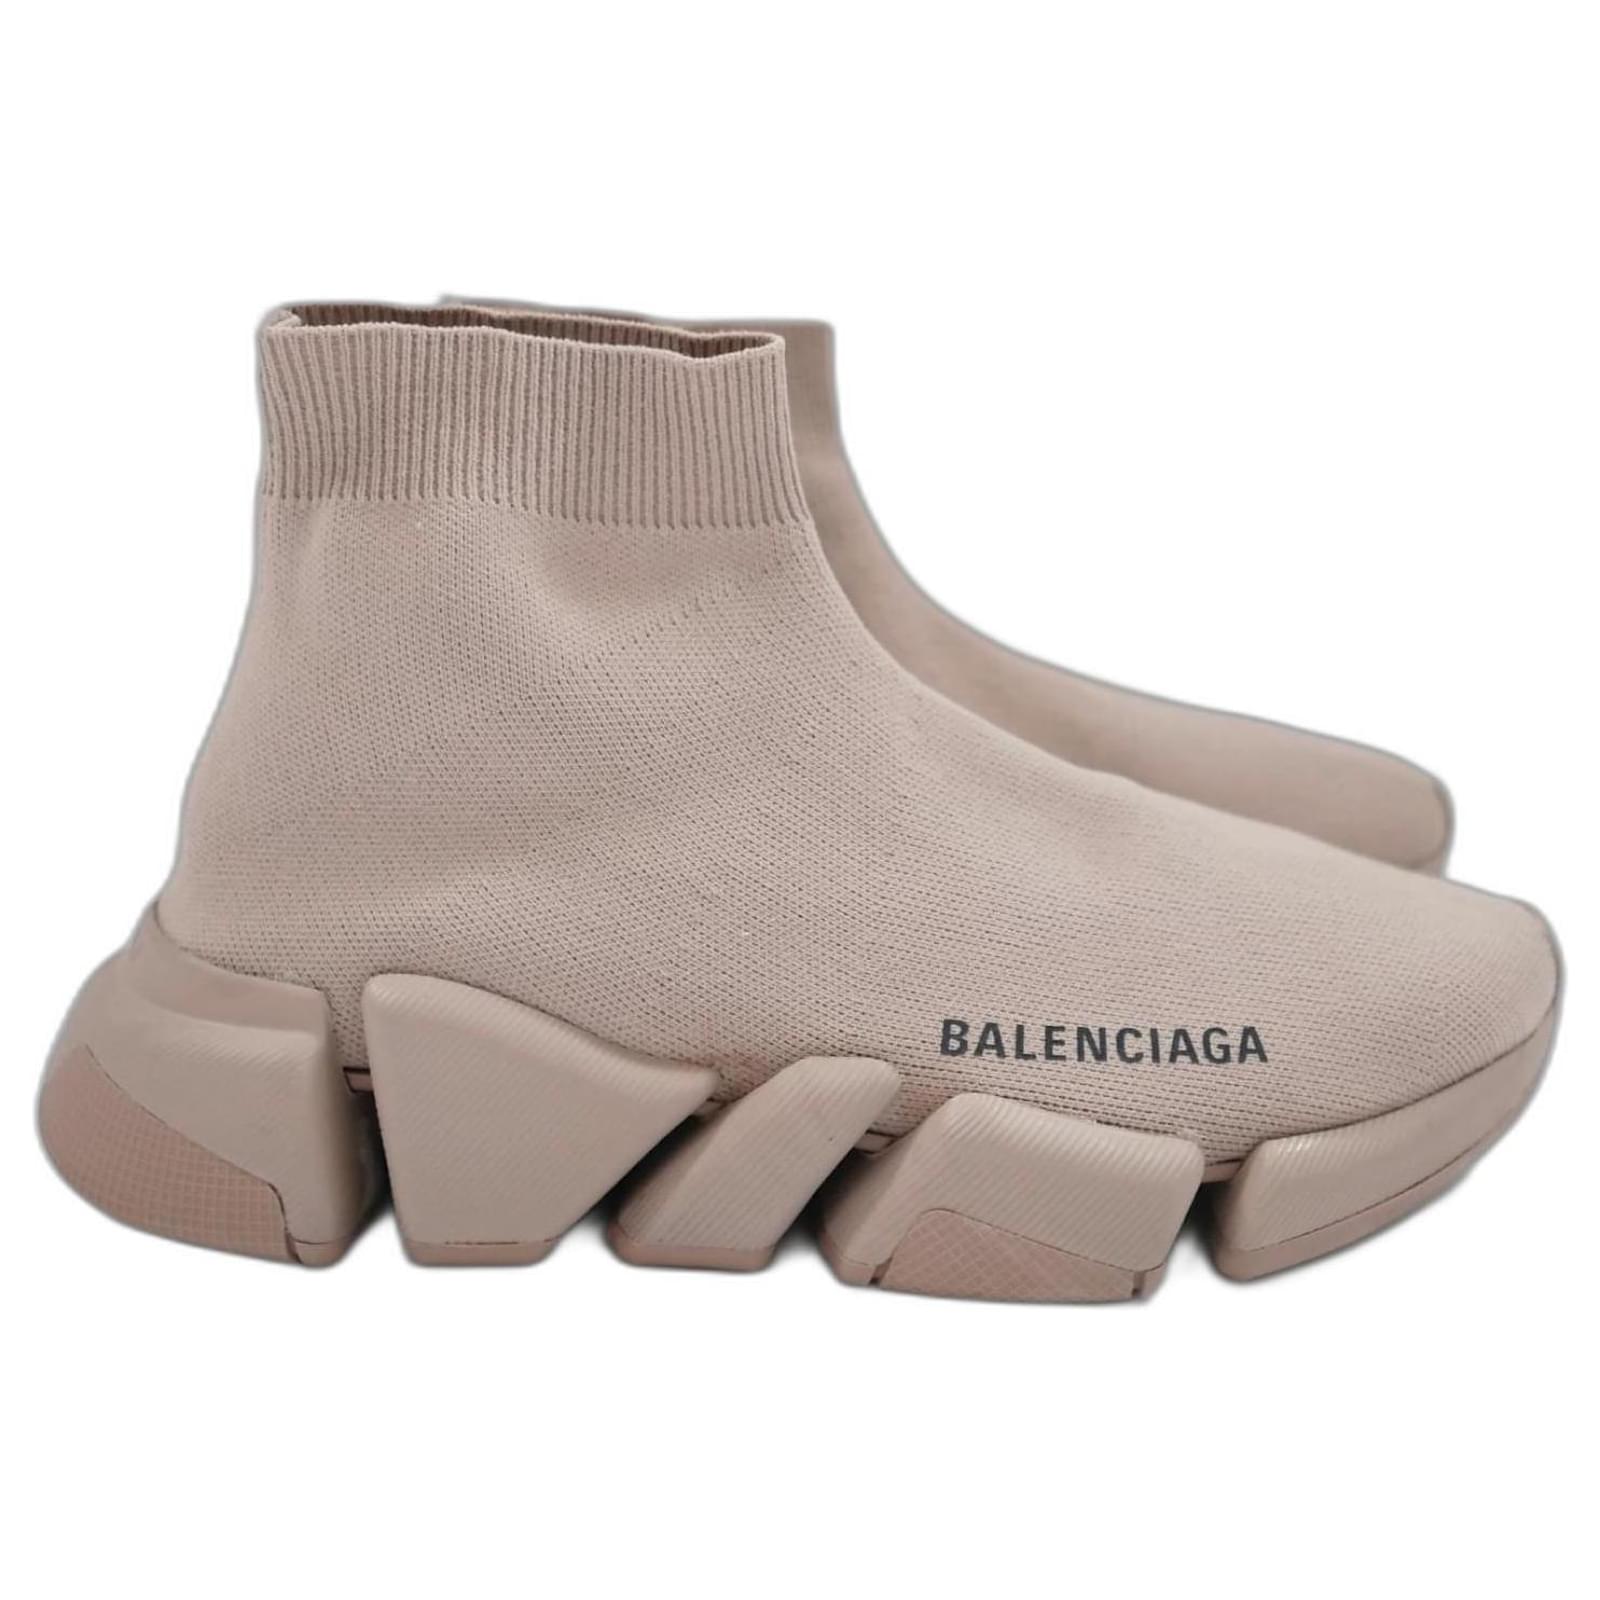 Discover 198+ balenciaga sneakers sock latest